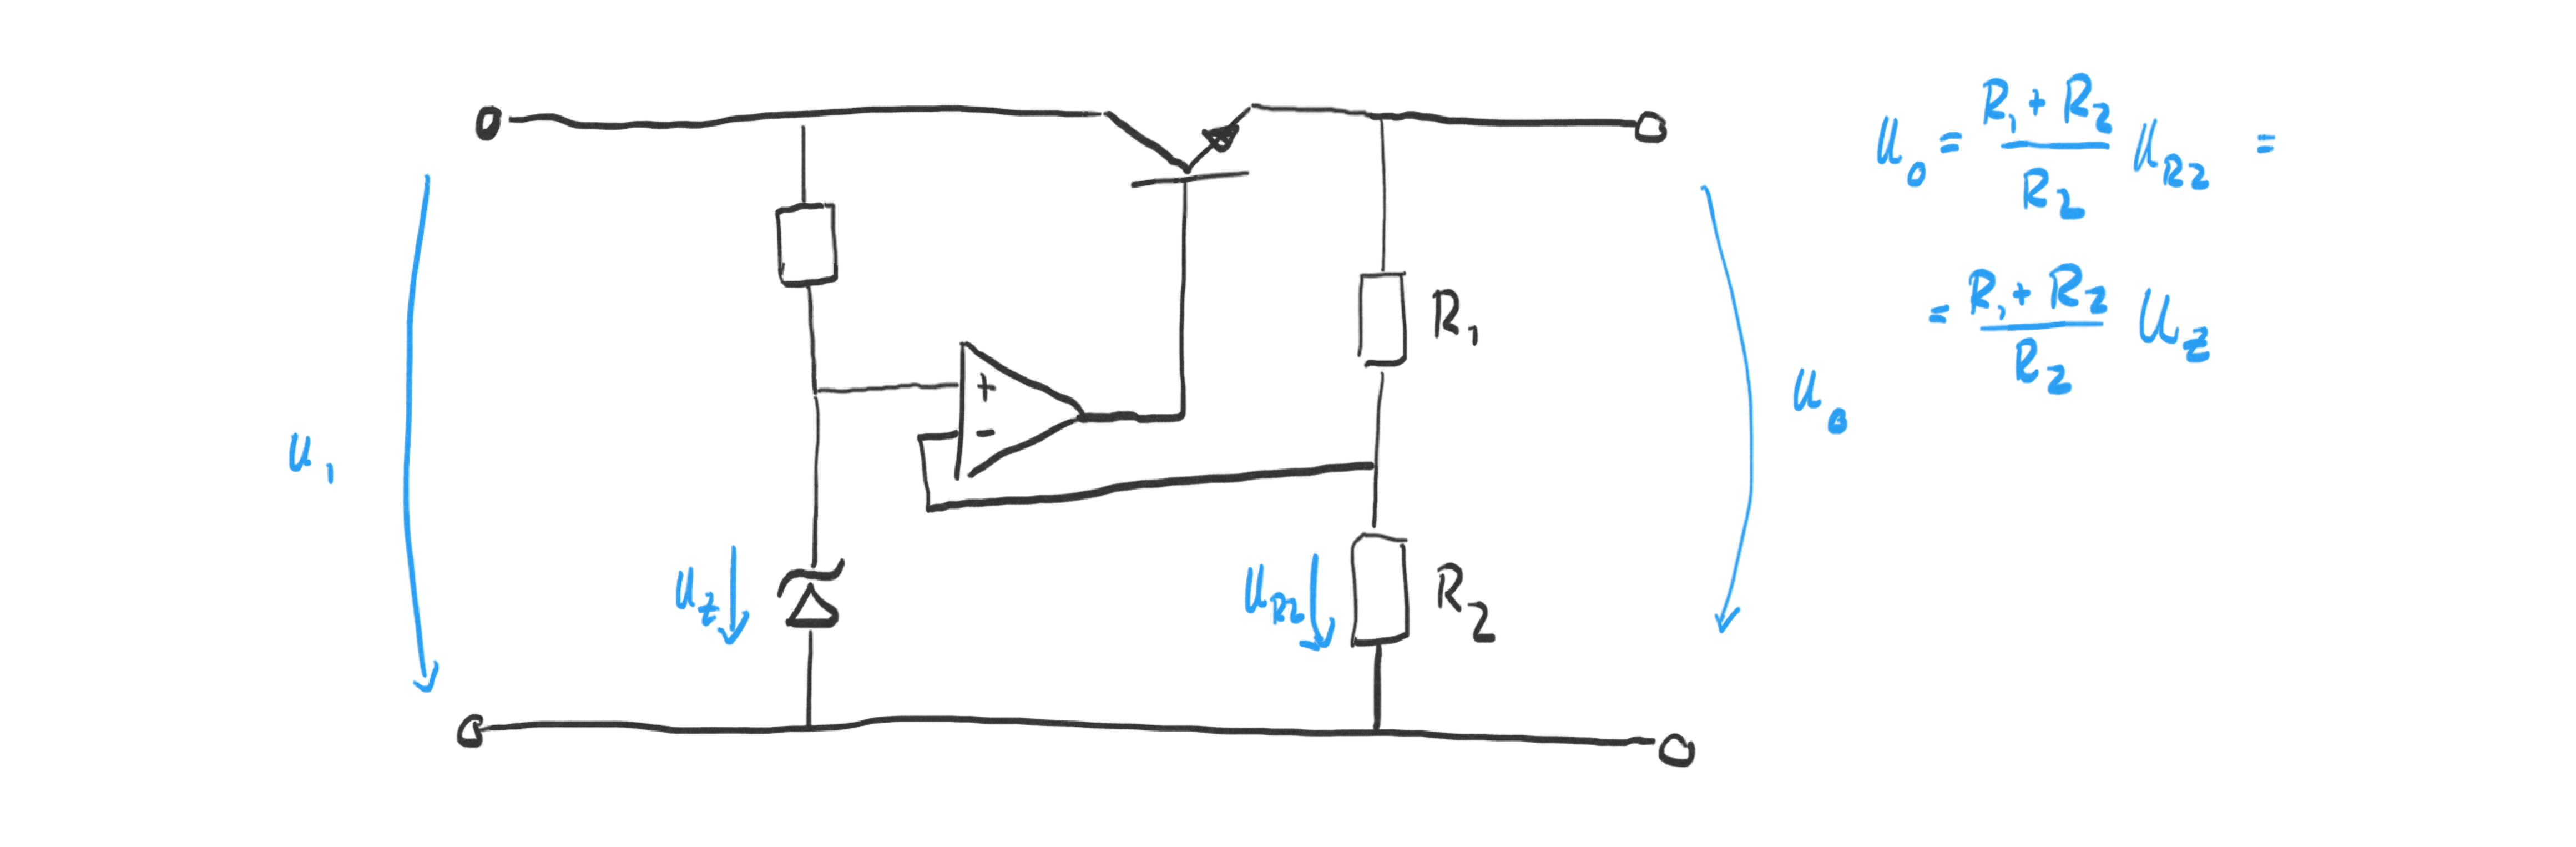 OpAmp-regulated Voltage Source